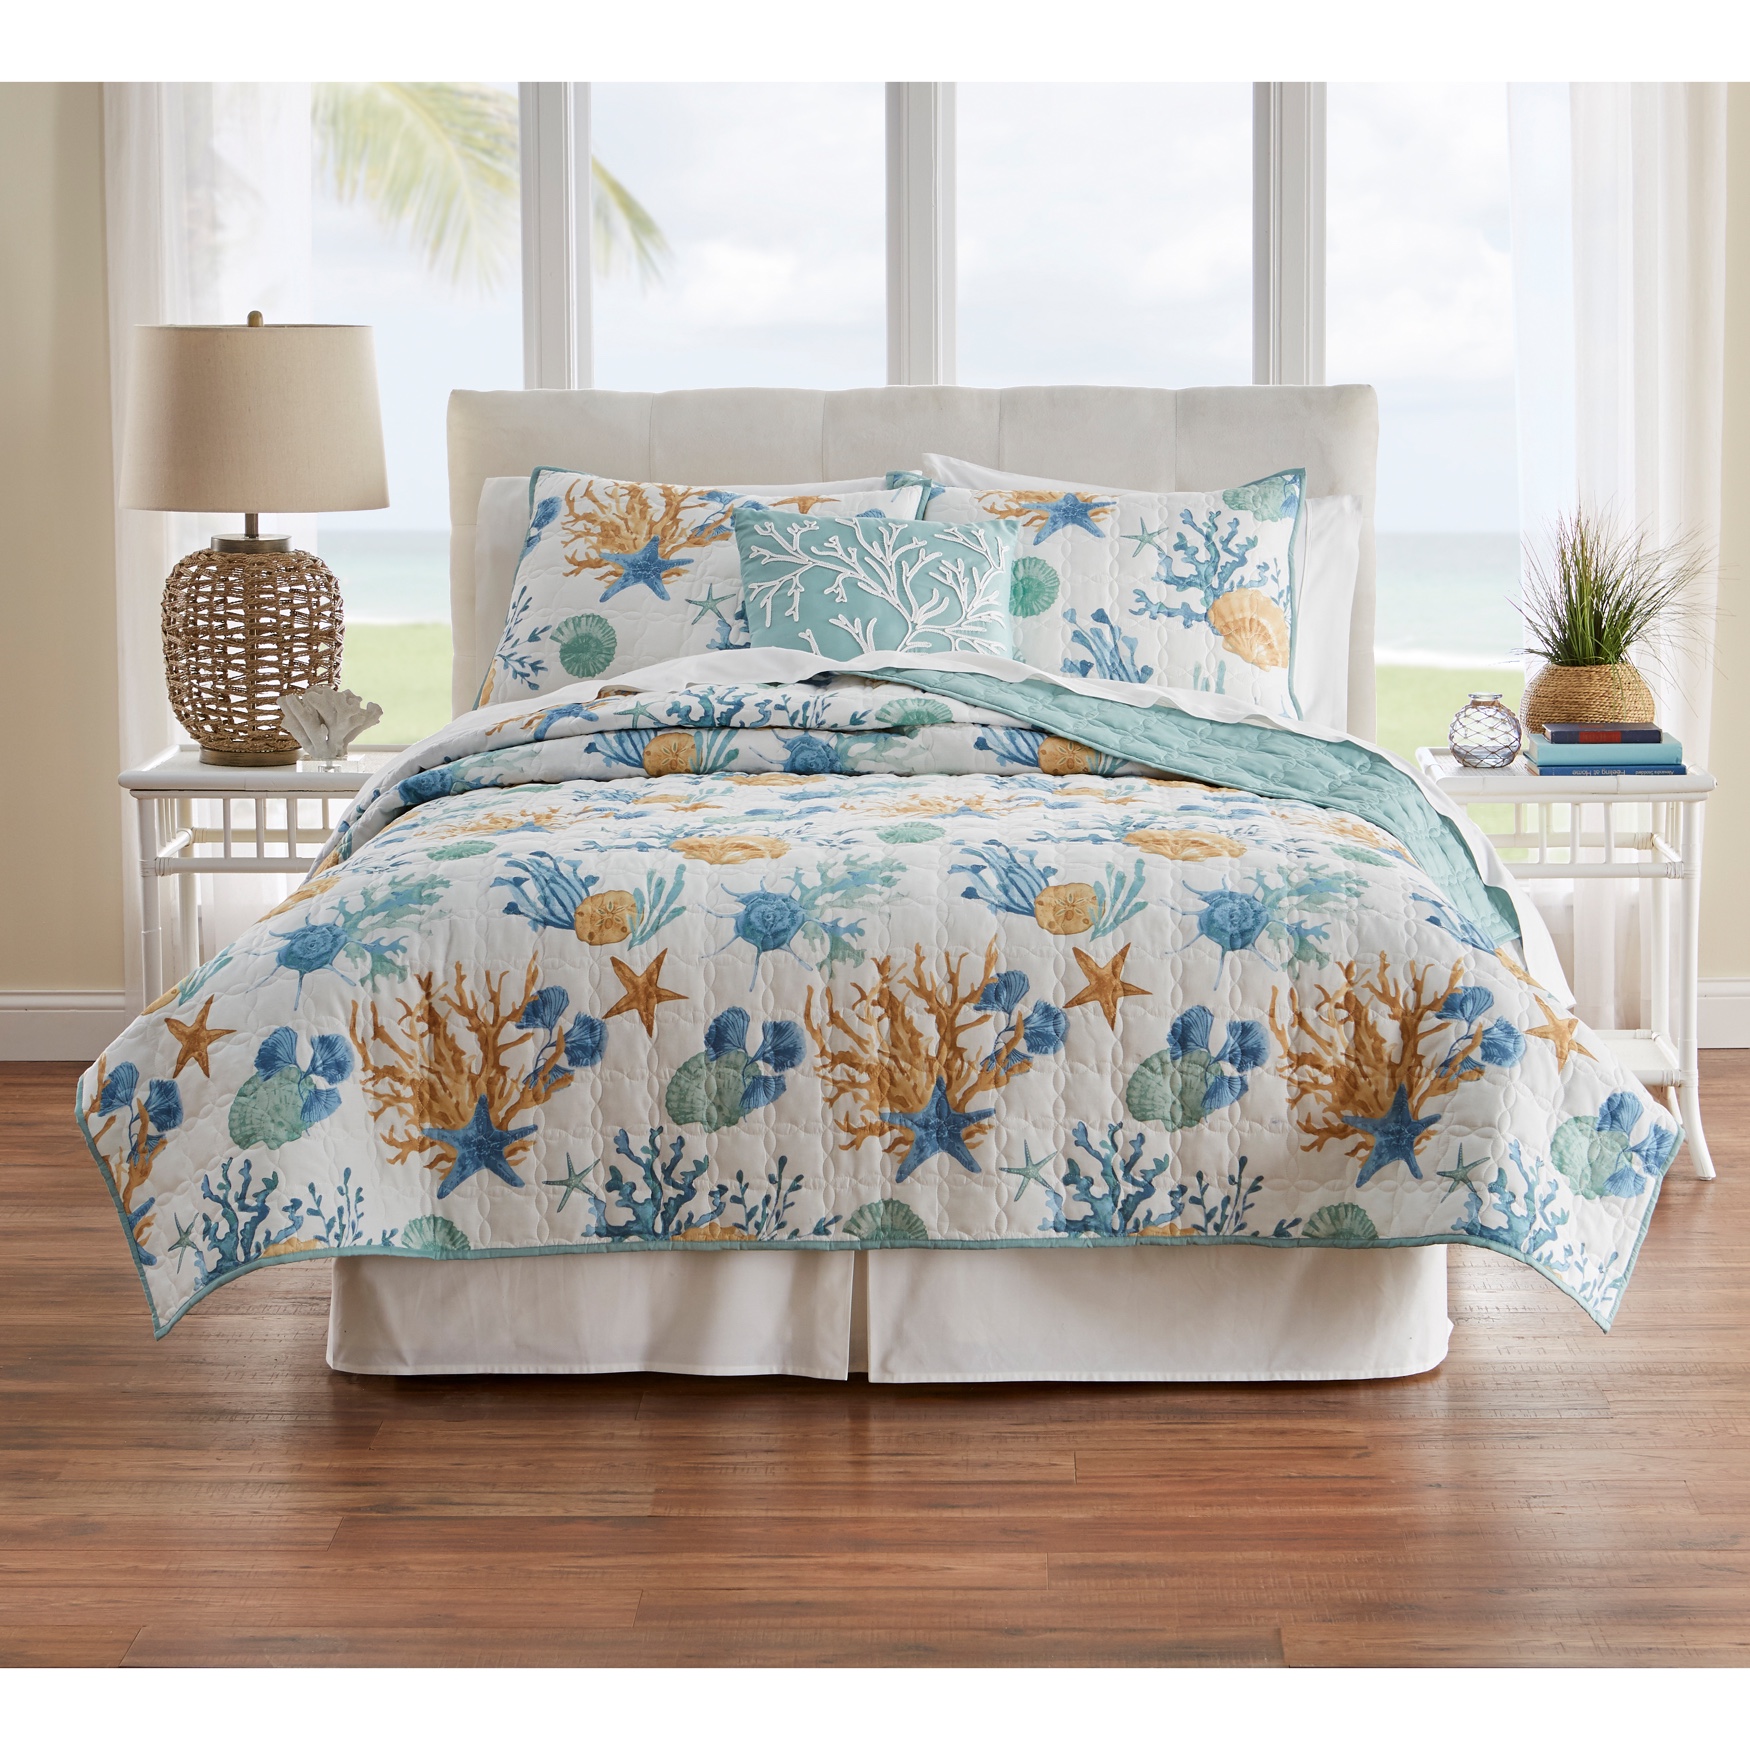 Summer Beach Nautical Lightweight Quilted Bedspread Twin with 1 Sham SLPR Blue Wave 2-Piece Bedding Quilt Set